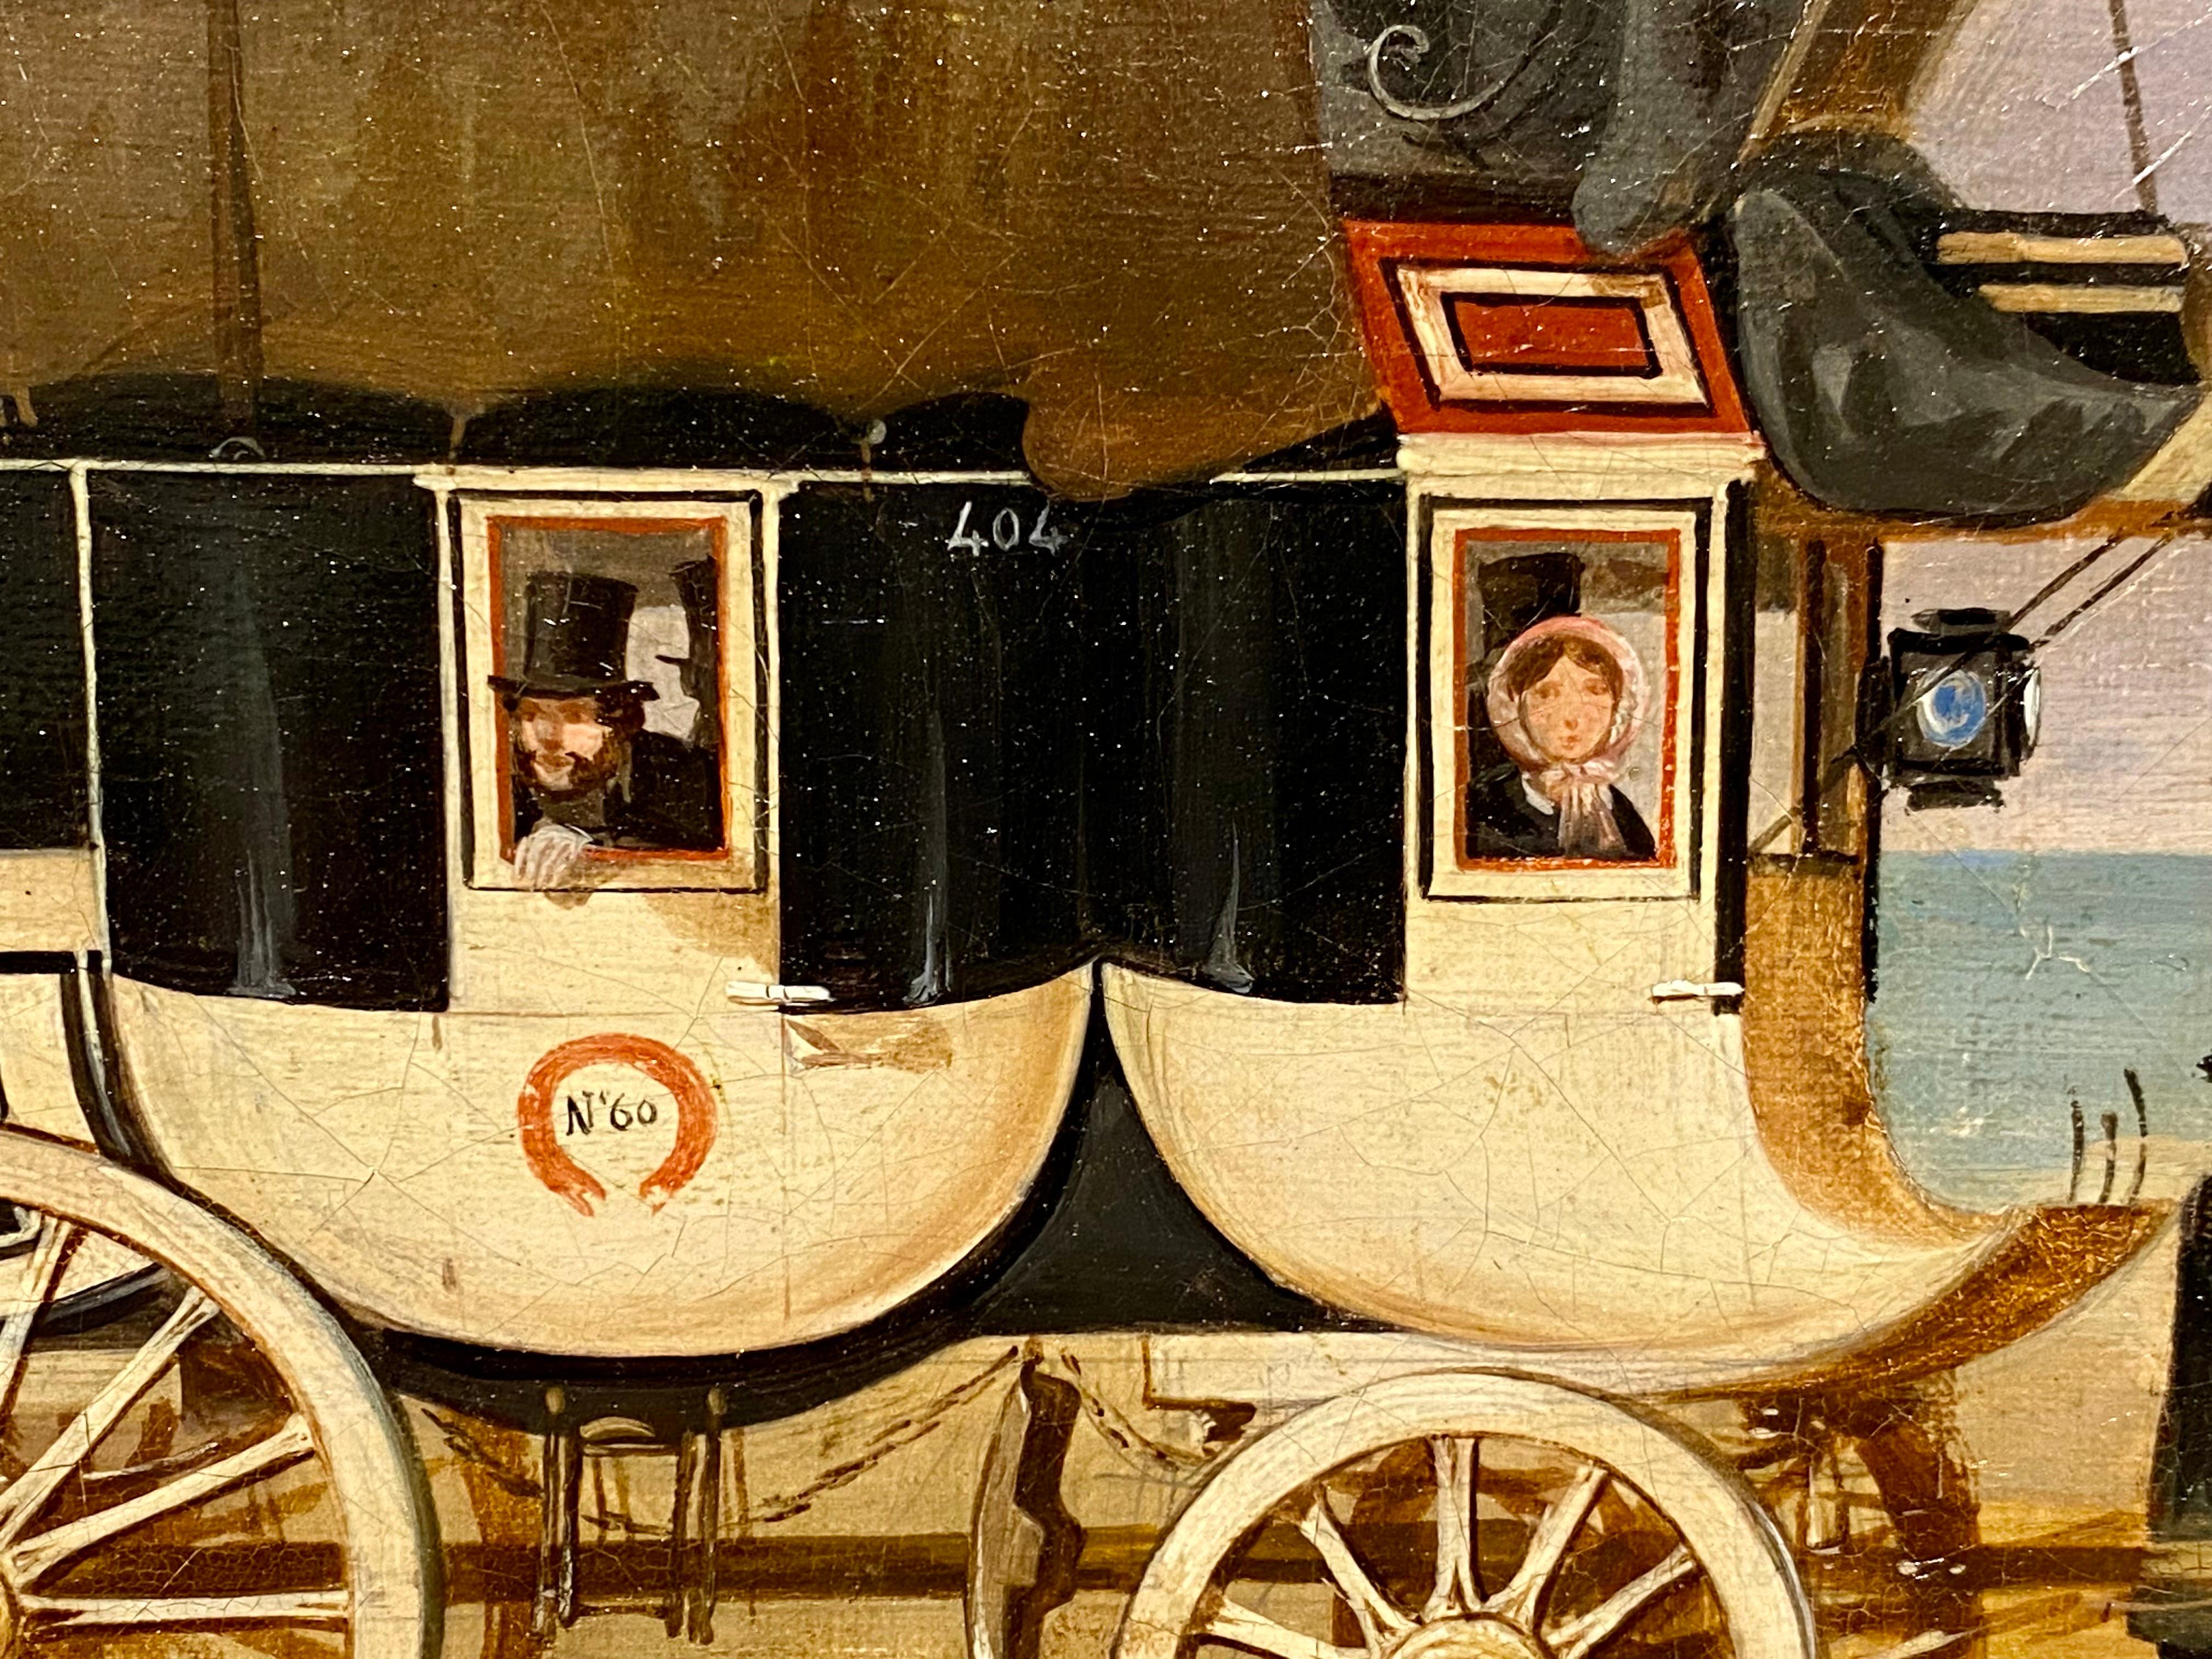 polin carriage scene